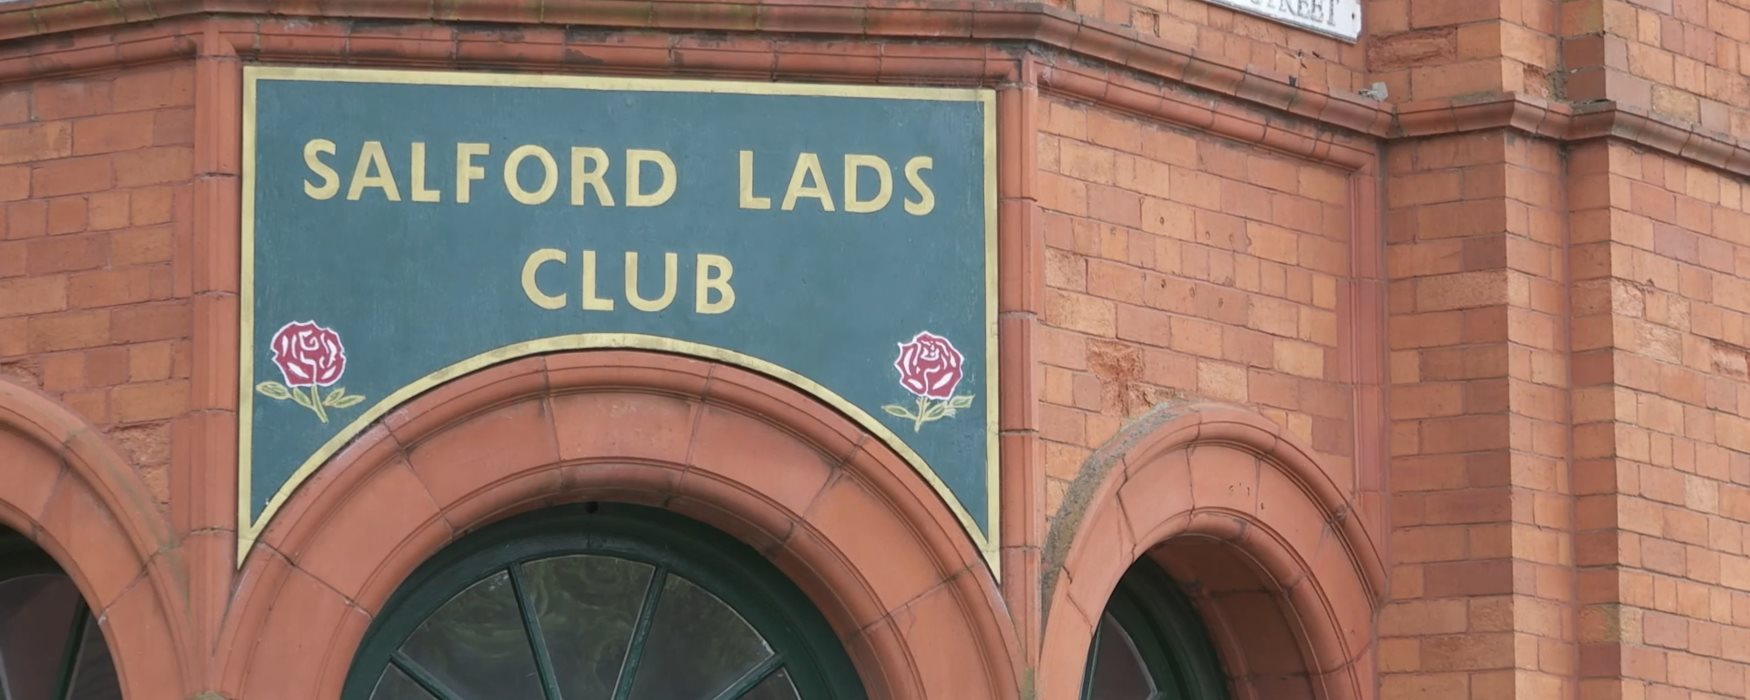 salford lads club sign